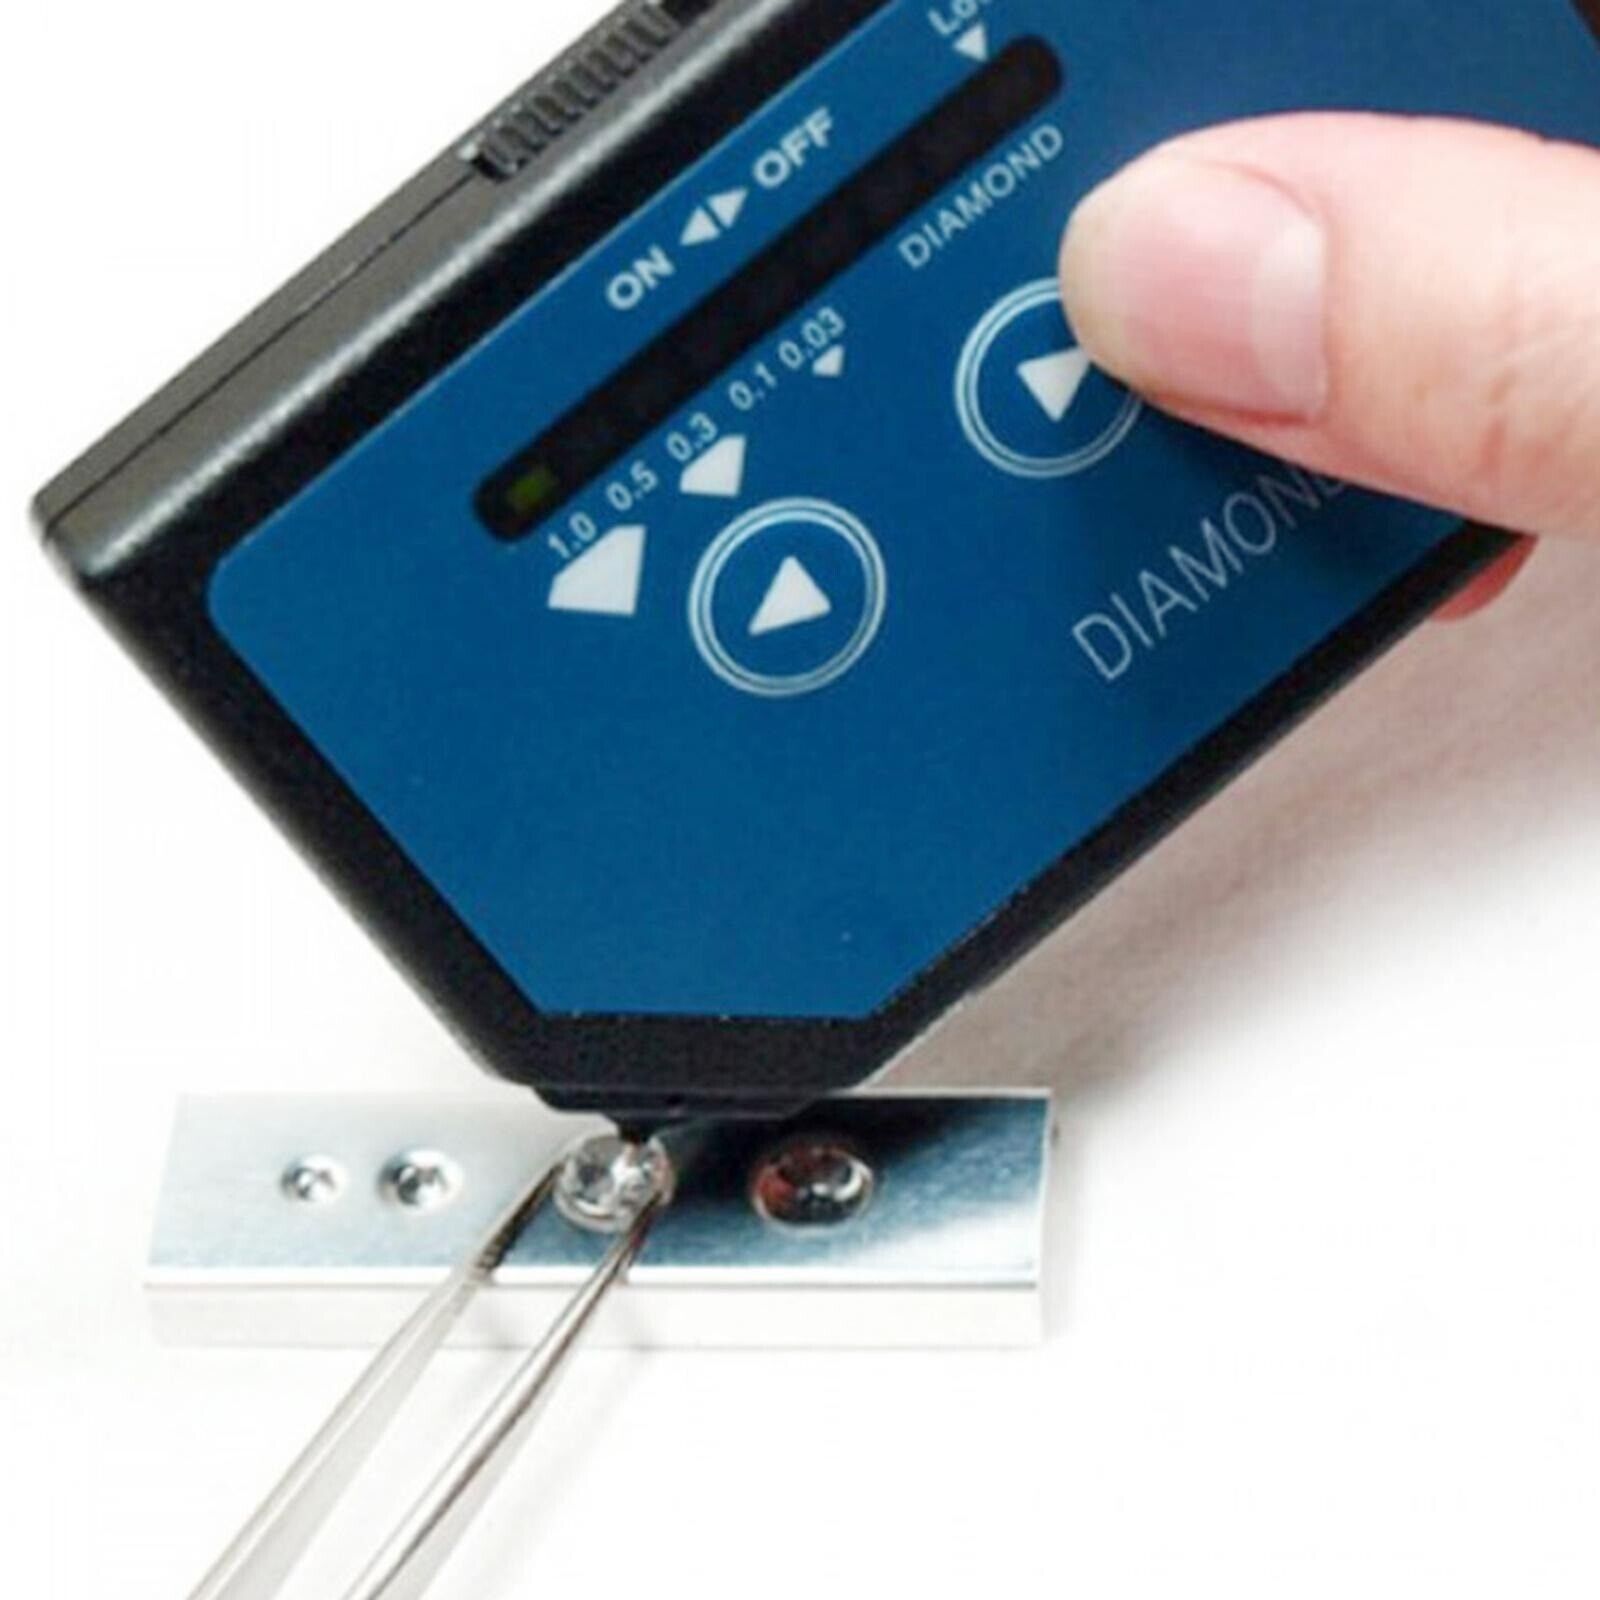 Diamond Tester Portable Electronic Jewelry Gemstone Selector Tool Sound Light